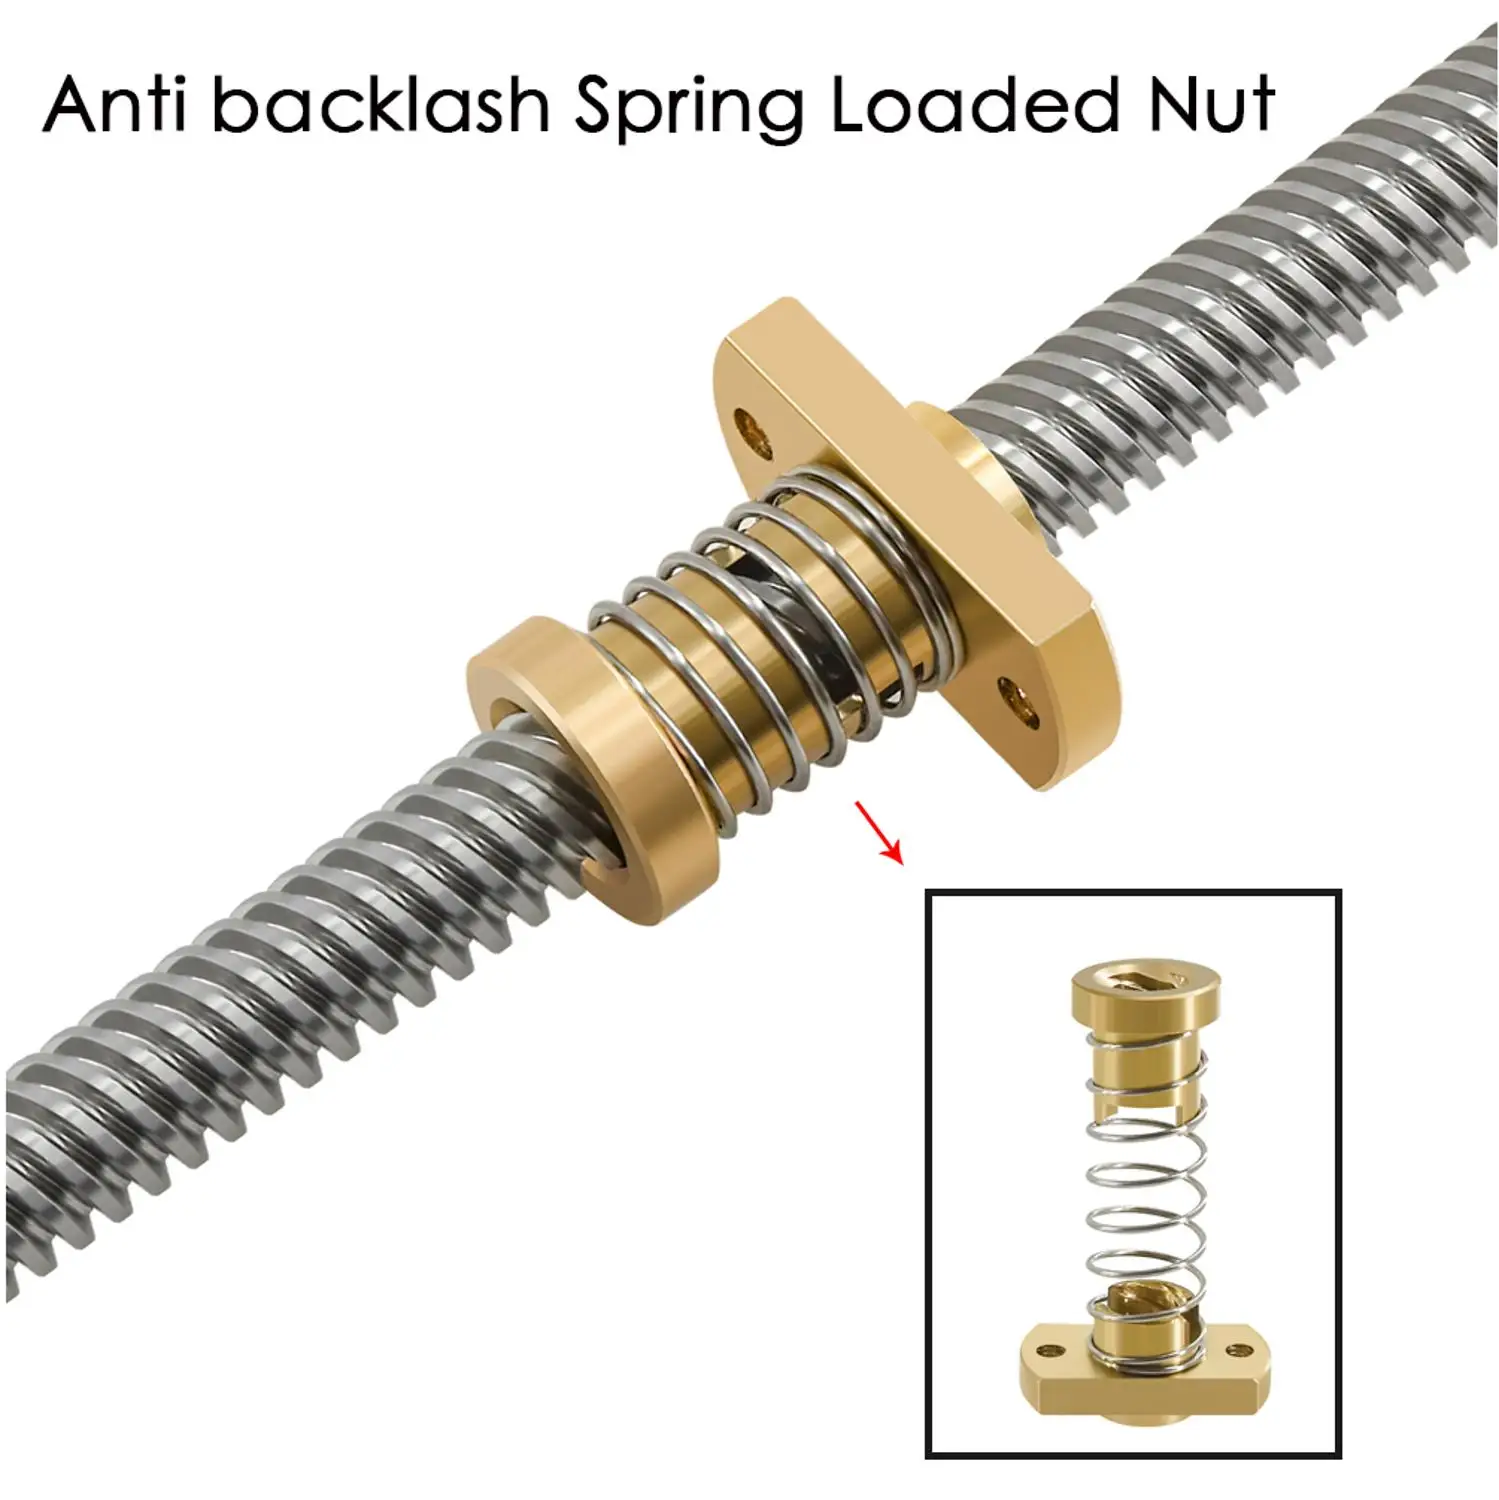 

Anti - back lash TR8 lead screw brass nut for upgrade Ender 3 CR-10/Tornado and clone 3D printer anti backlash Spring Loaded Nut